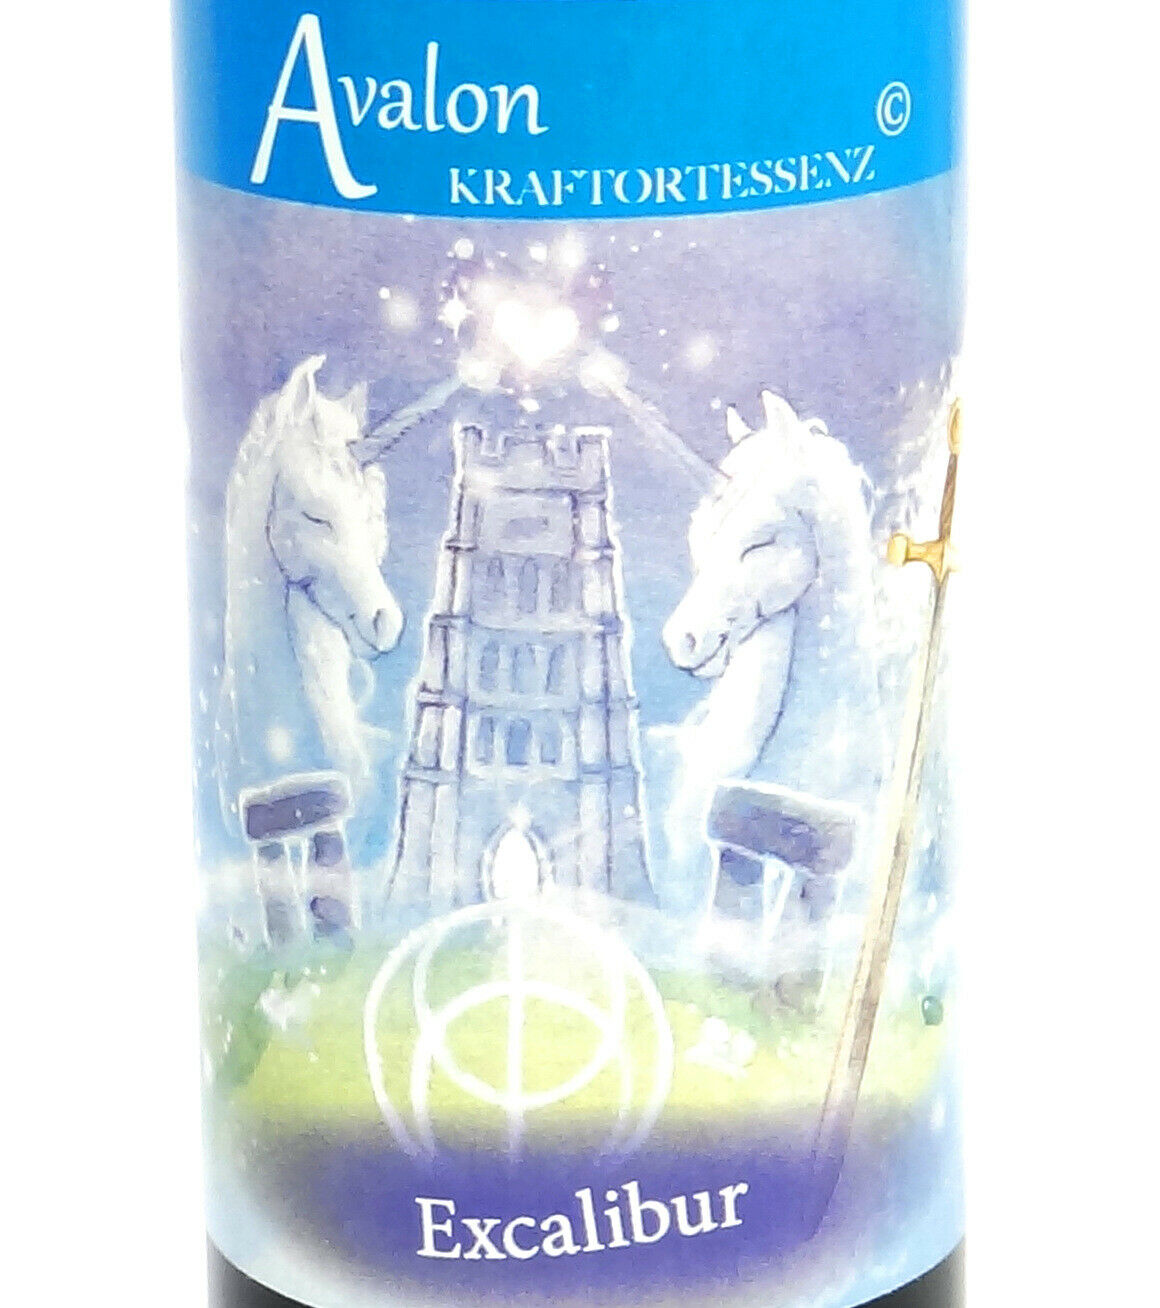 Avalon Kraftortessenz~excalibur~kraftort Aura Spray Fragrance Ethereal Ee-51